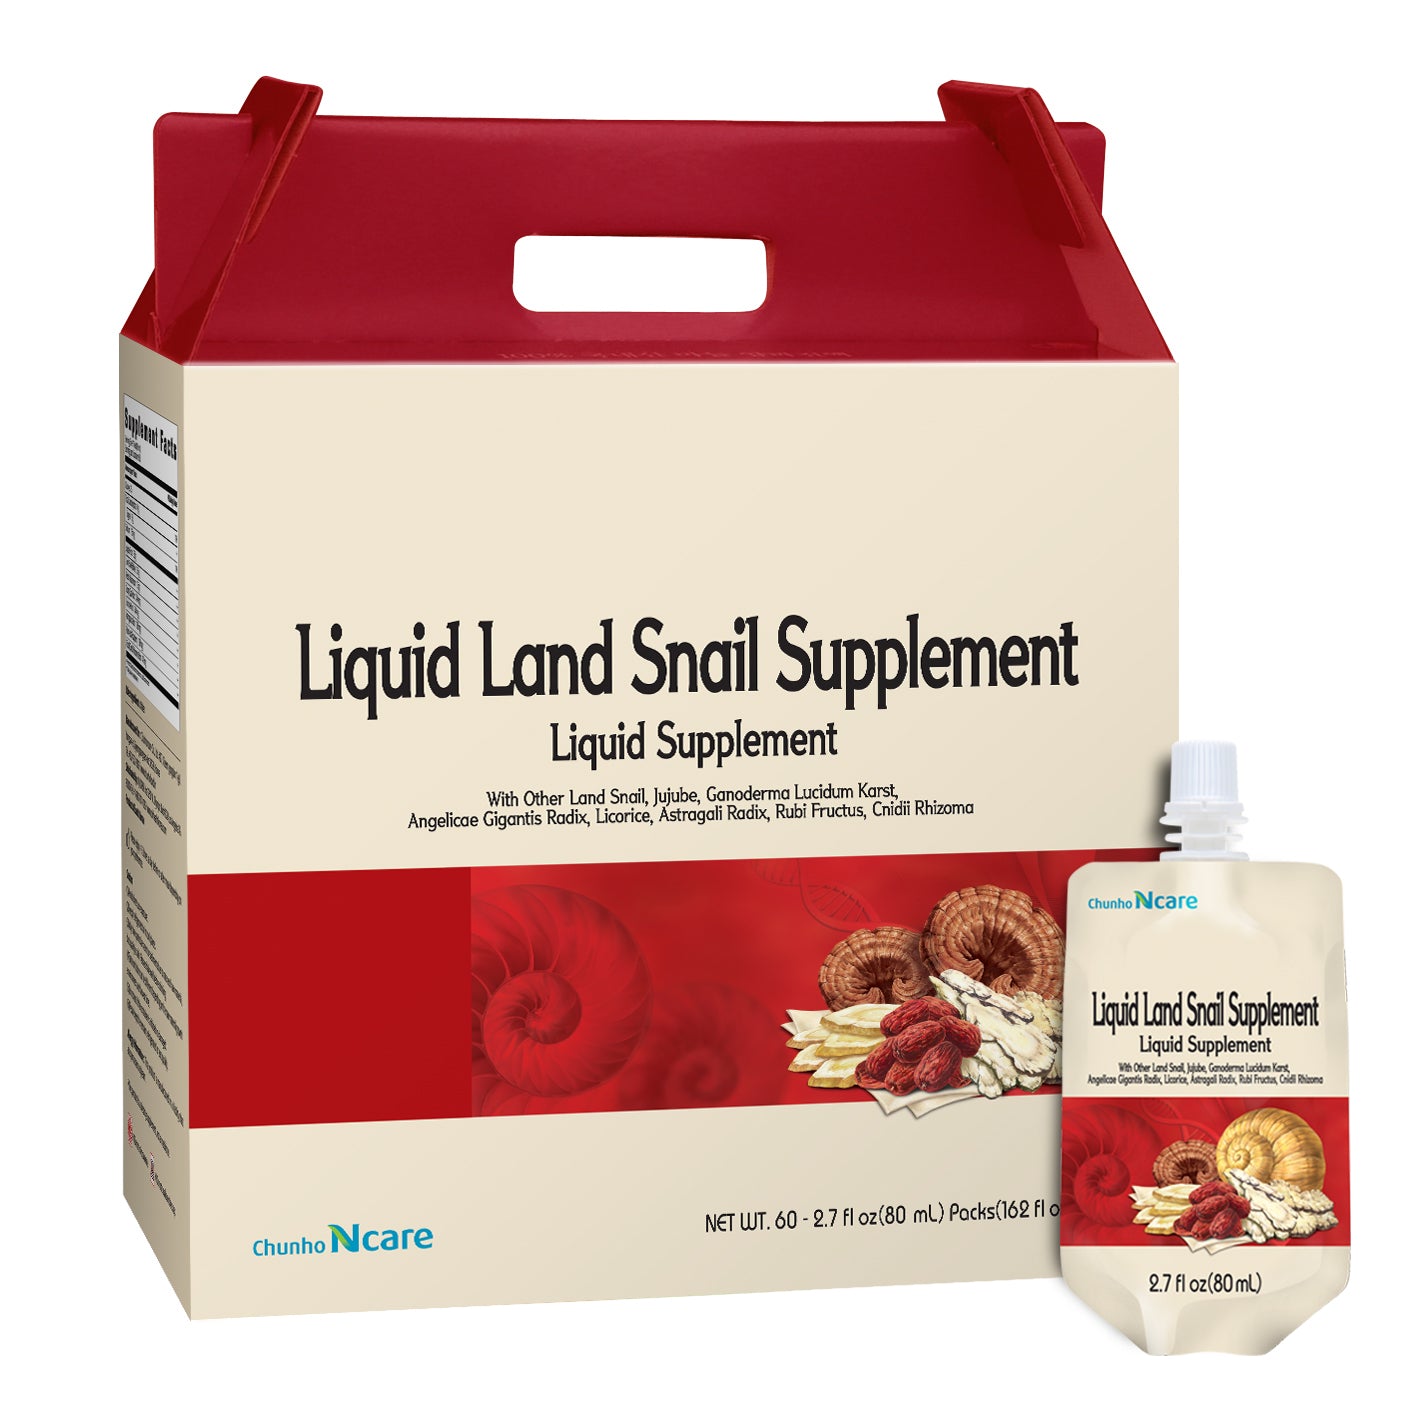 Land Snail Juice Premium